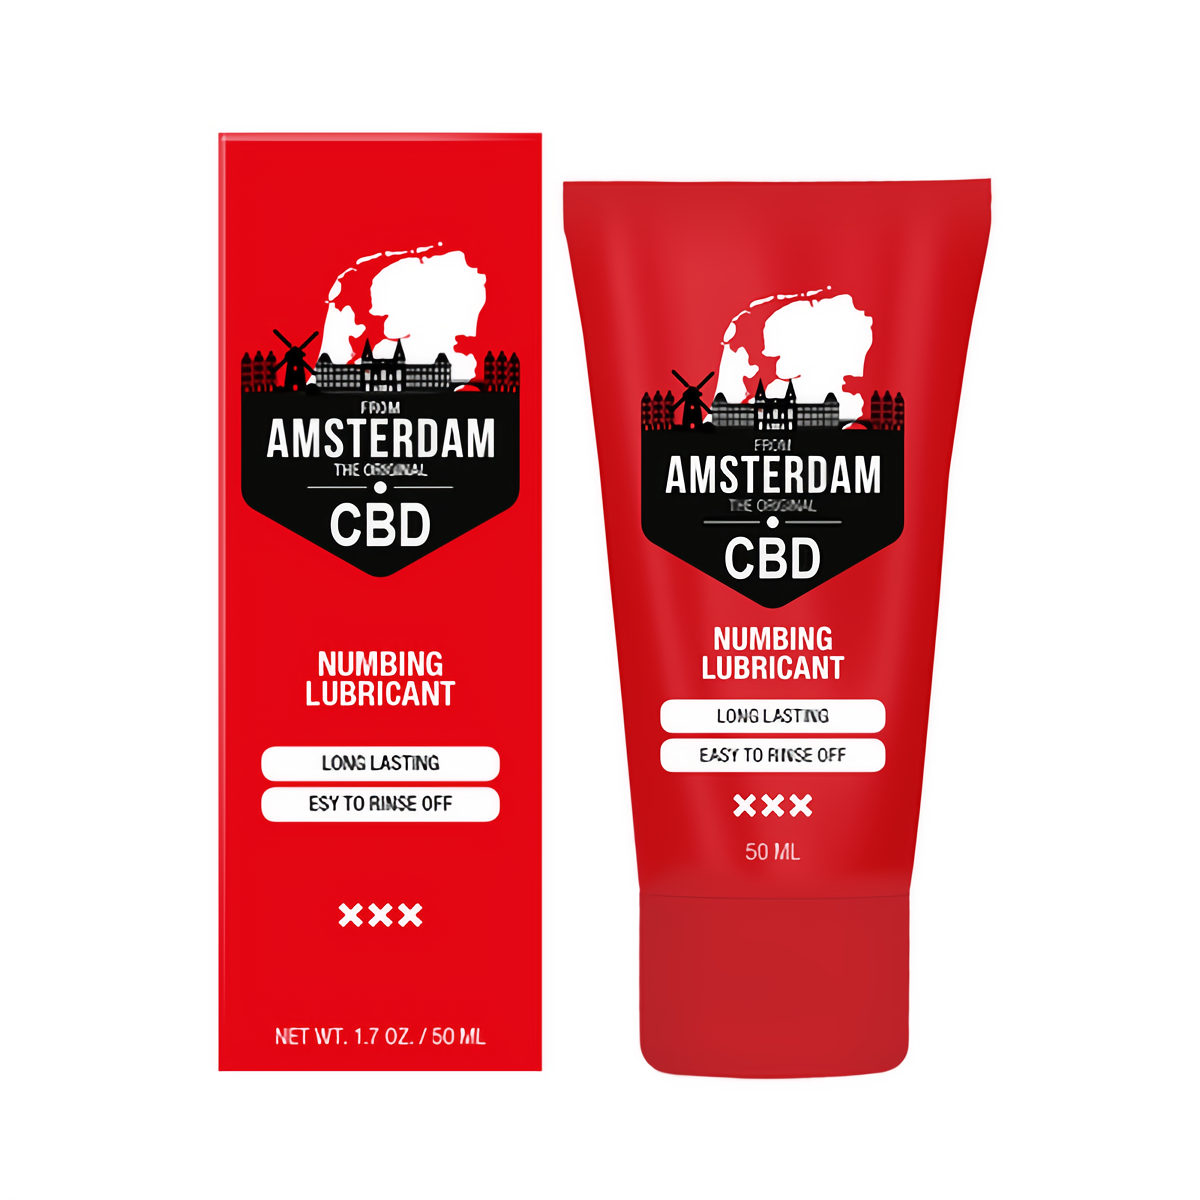 Original CBD from Amsterdam - 50 ml